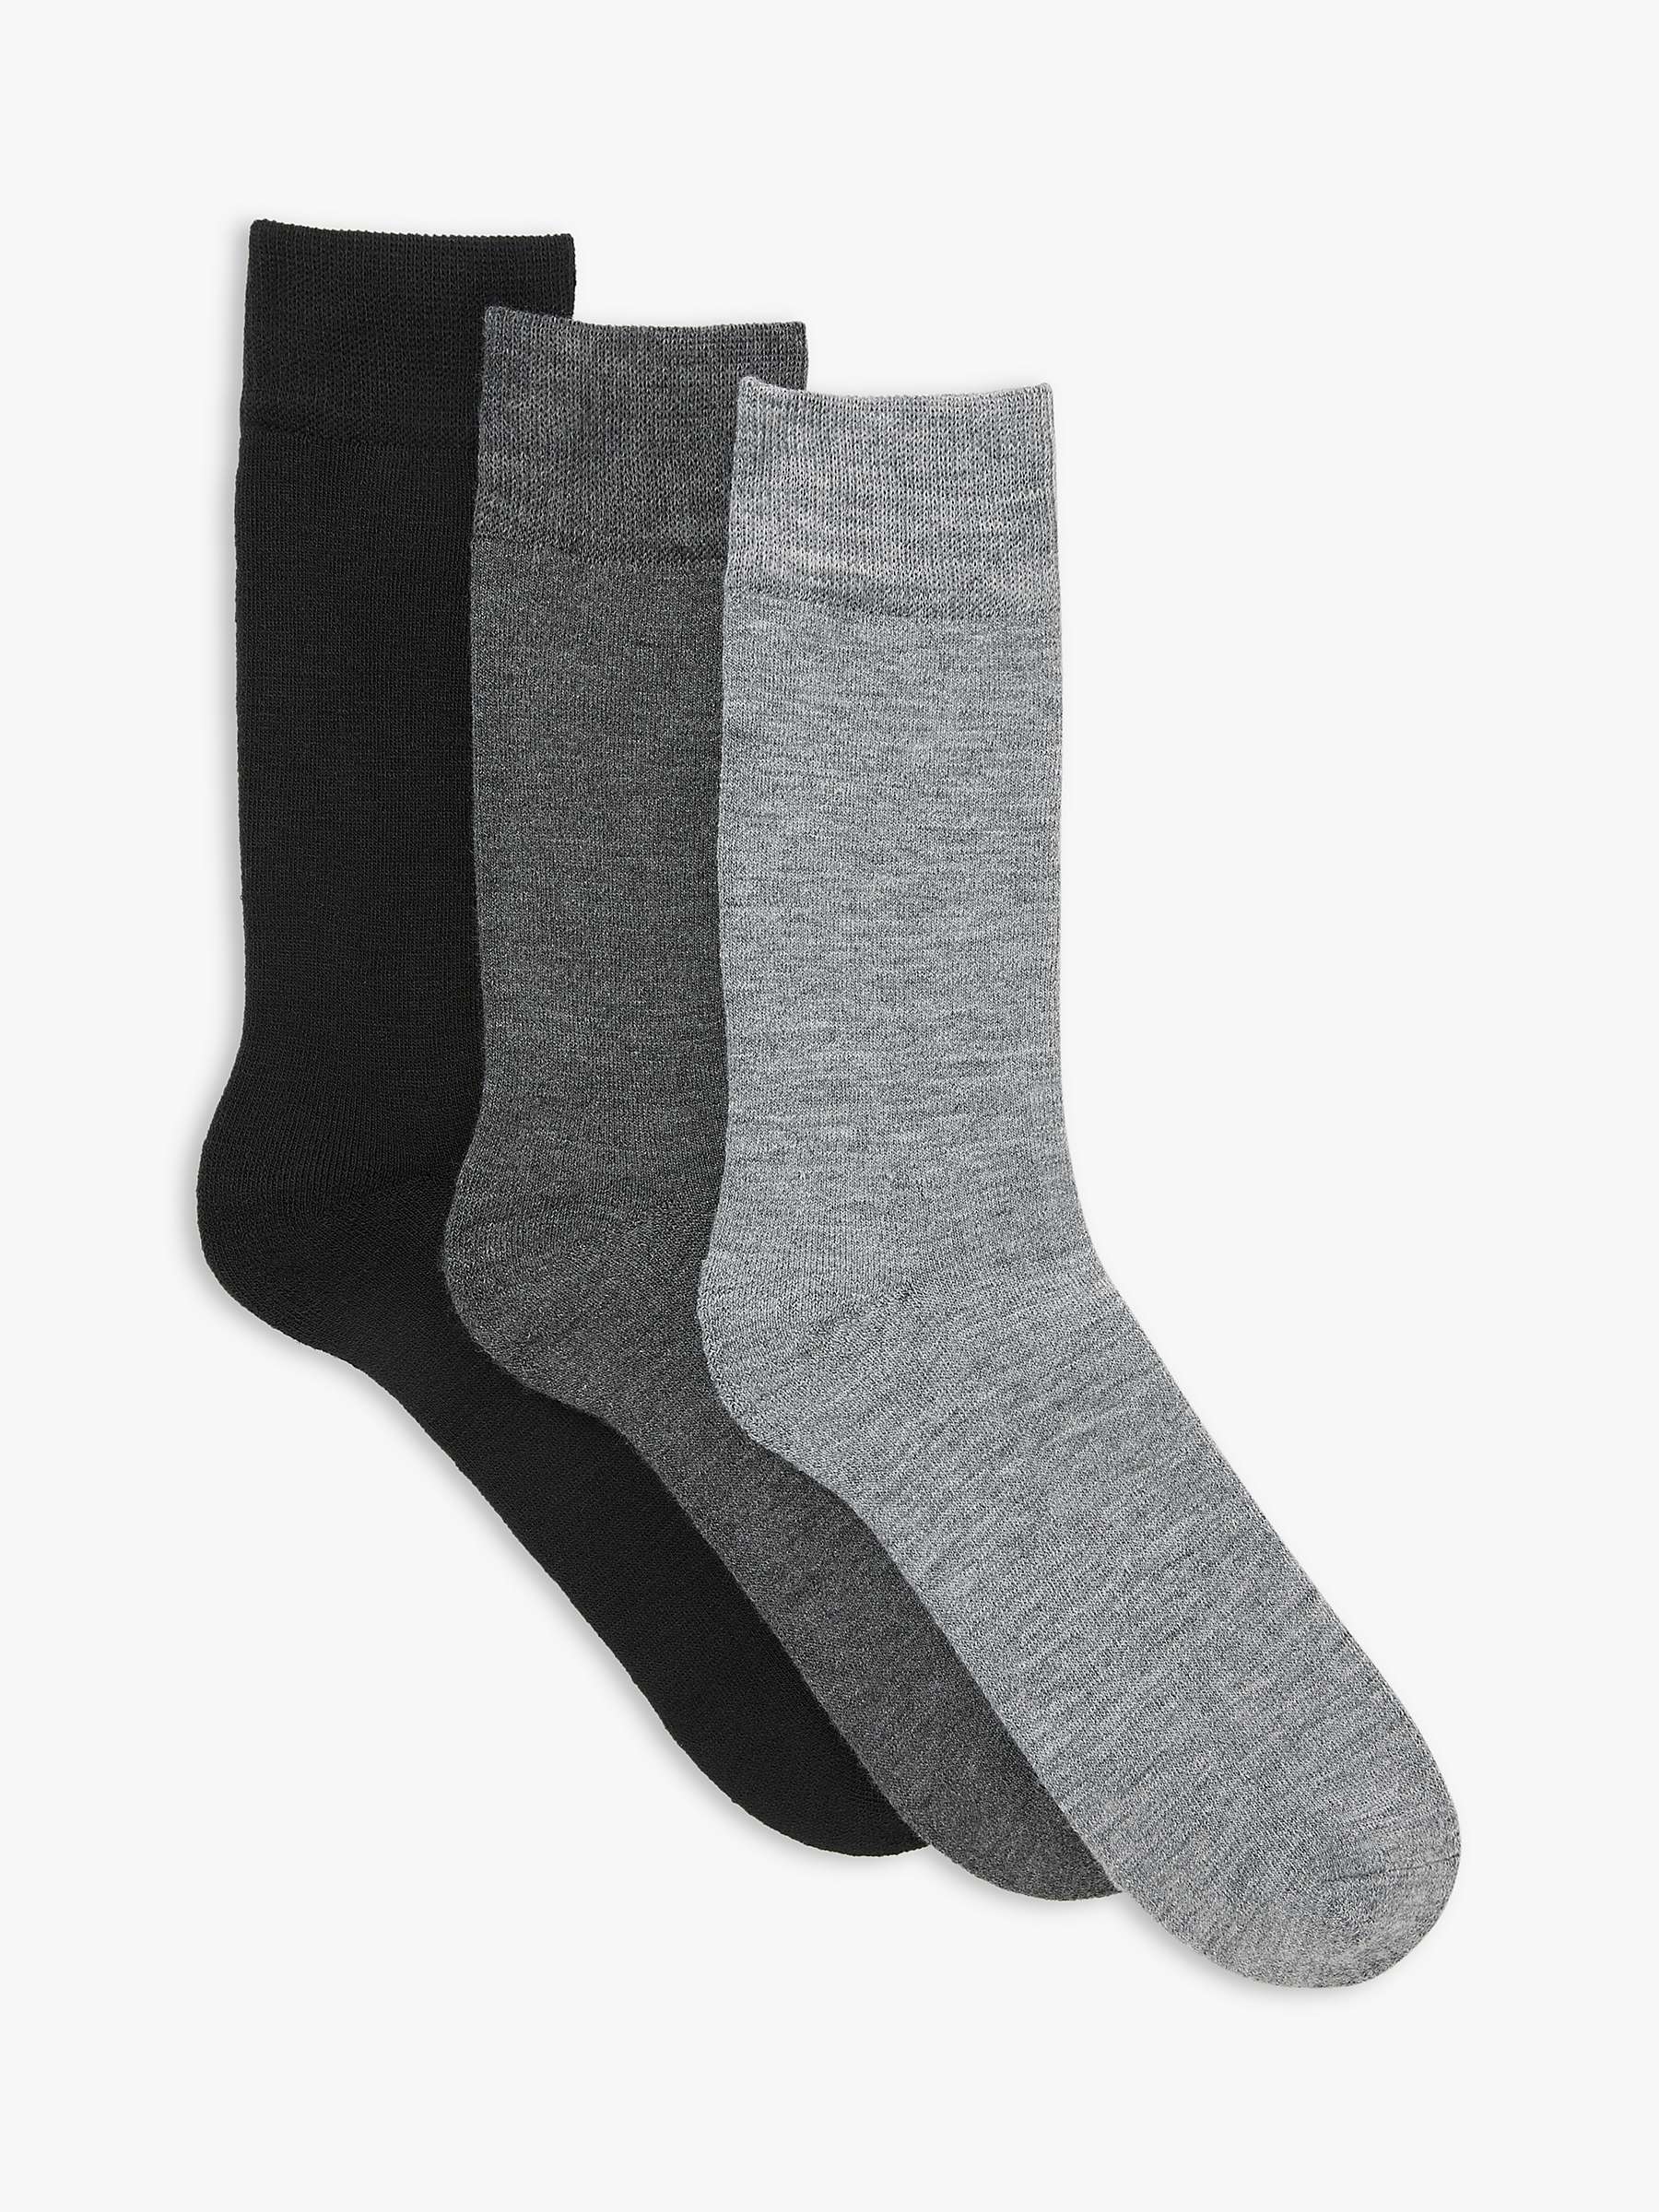 Buy John Lewis Thermal Wool Blend Socks, Pack of 3, One Size, Black/Charcoal/Grey Online at johnlewis.com